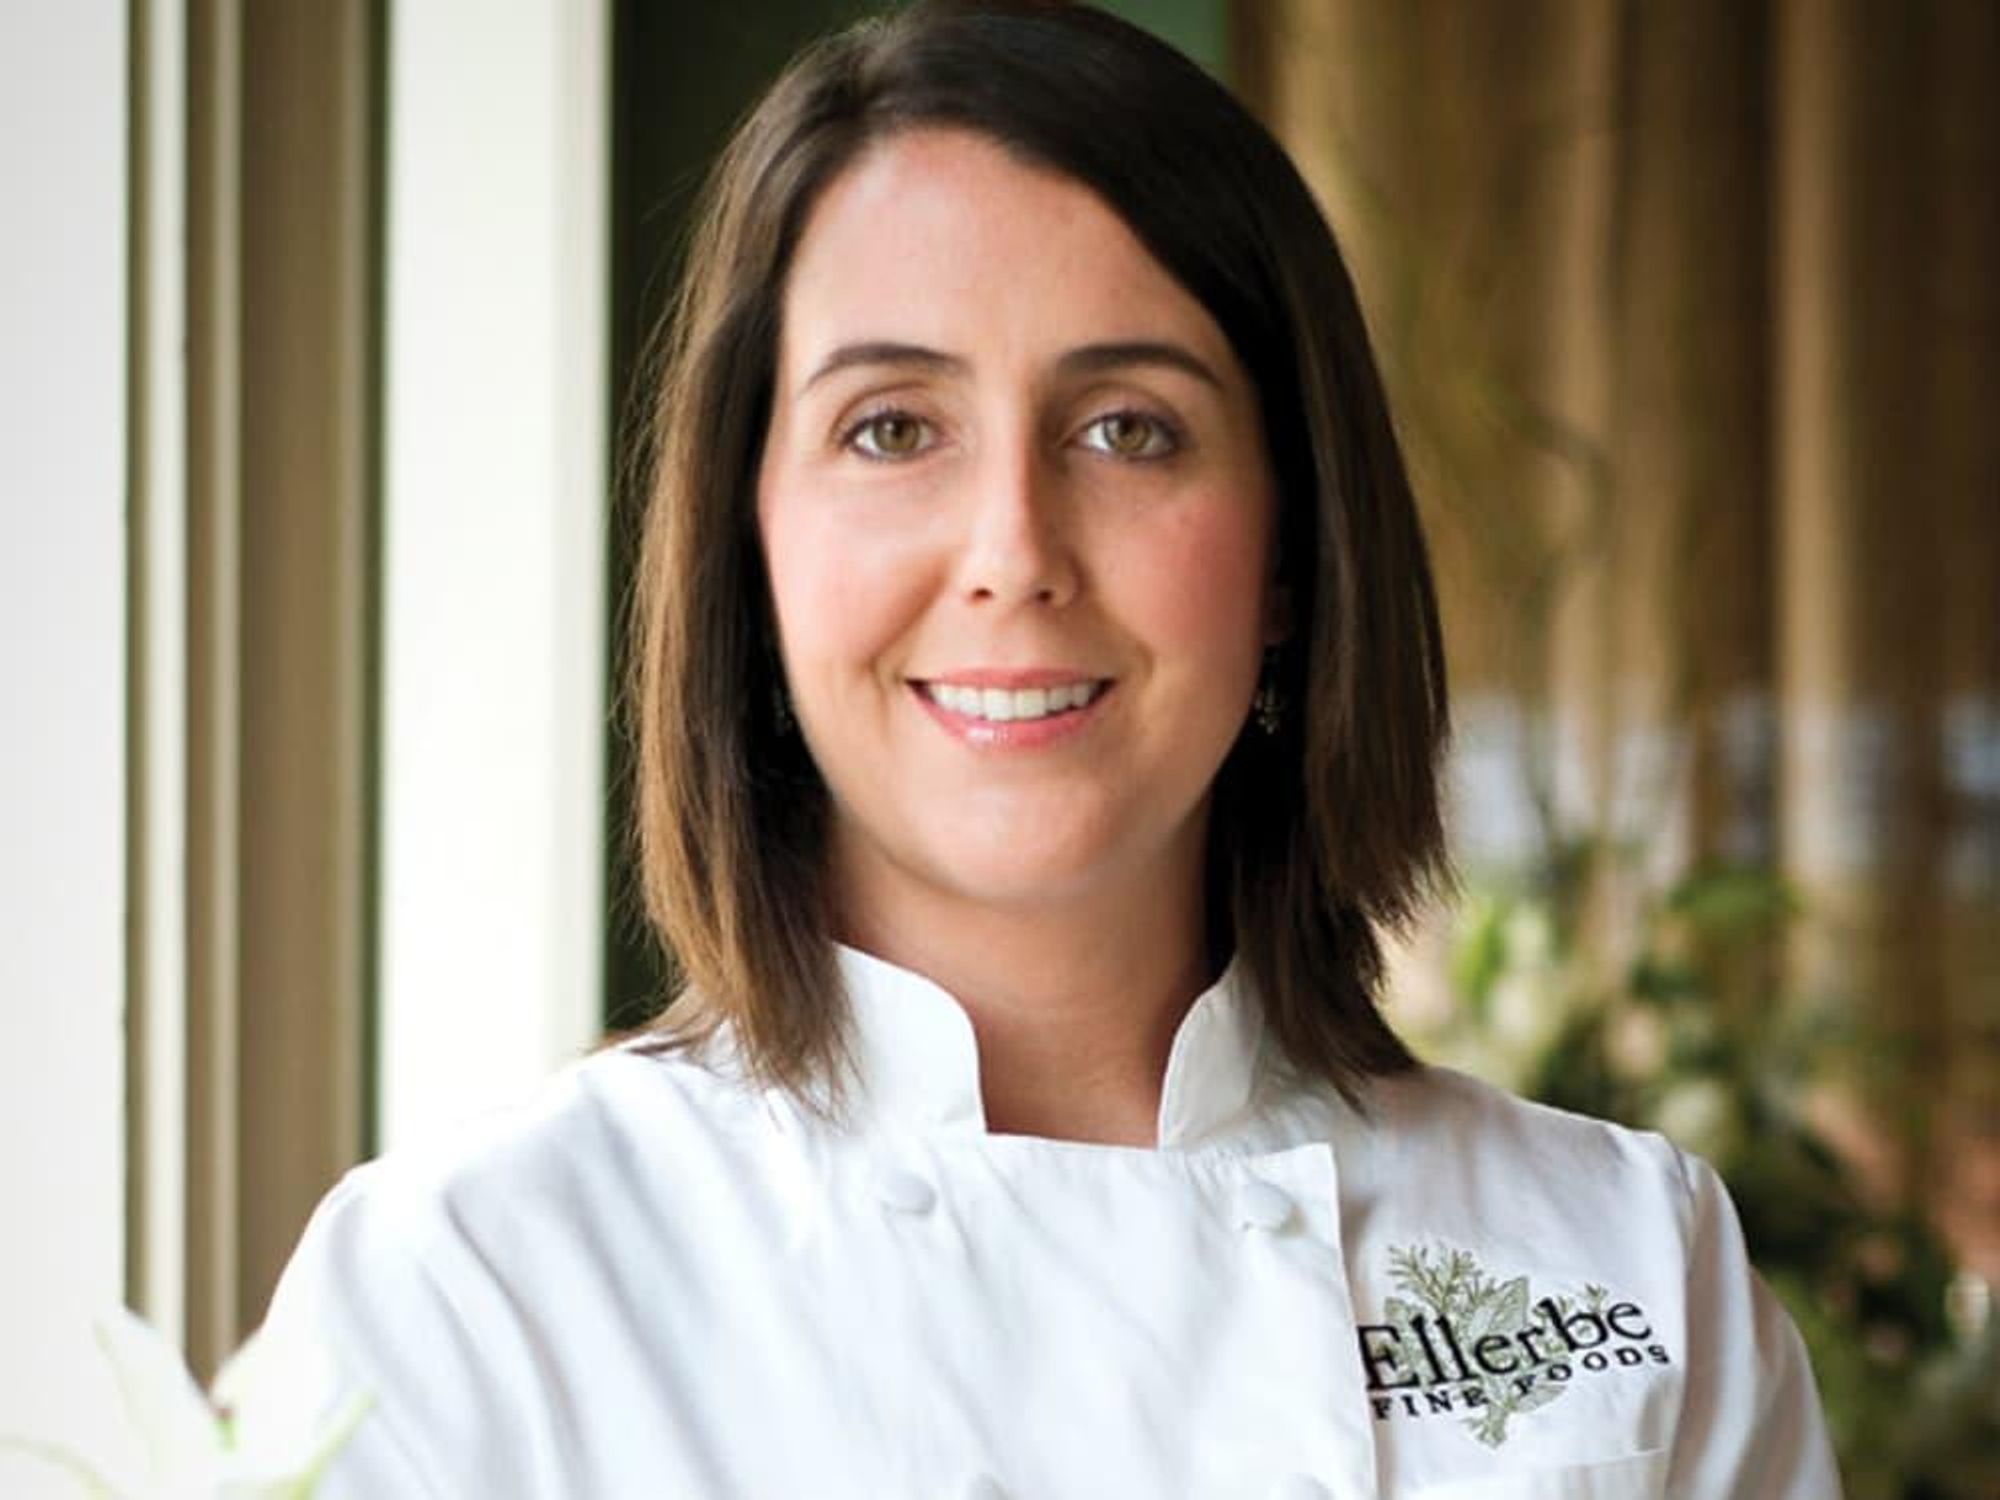 Chef Molly McCook of Ellerbe Fine Foods